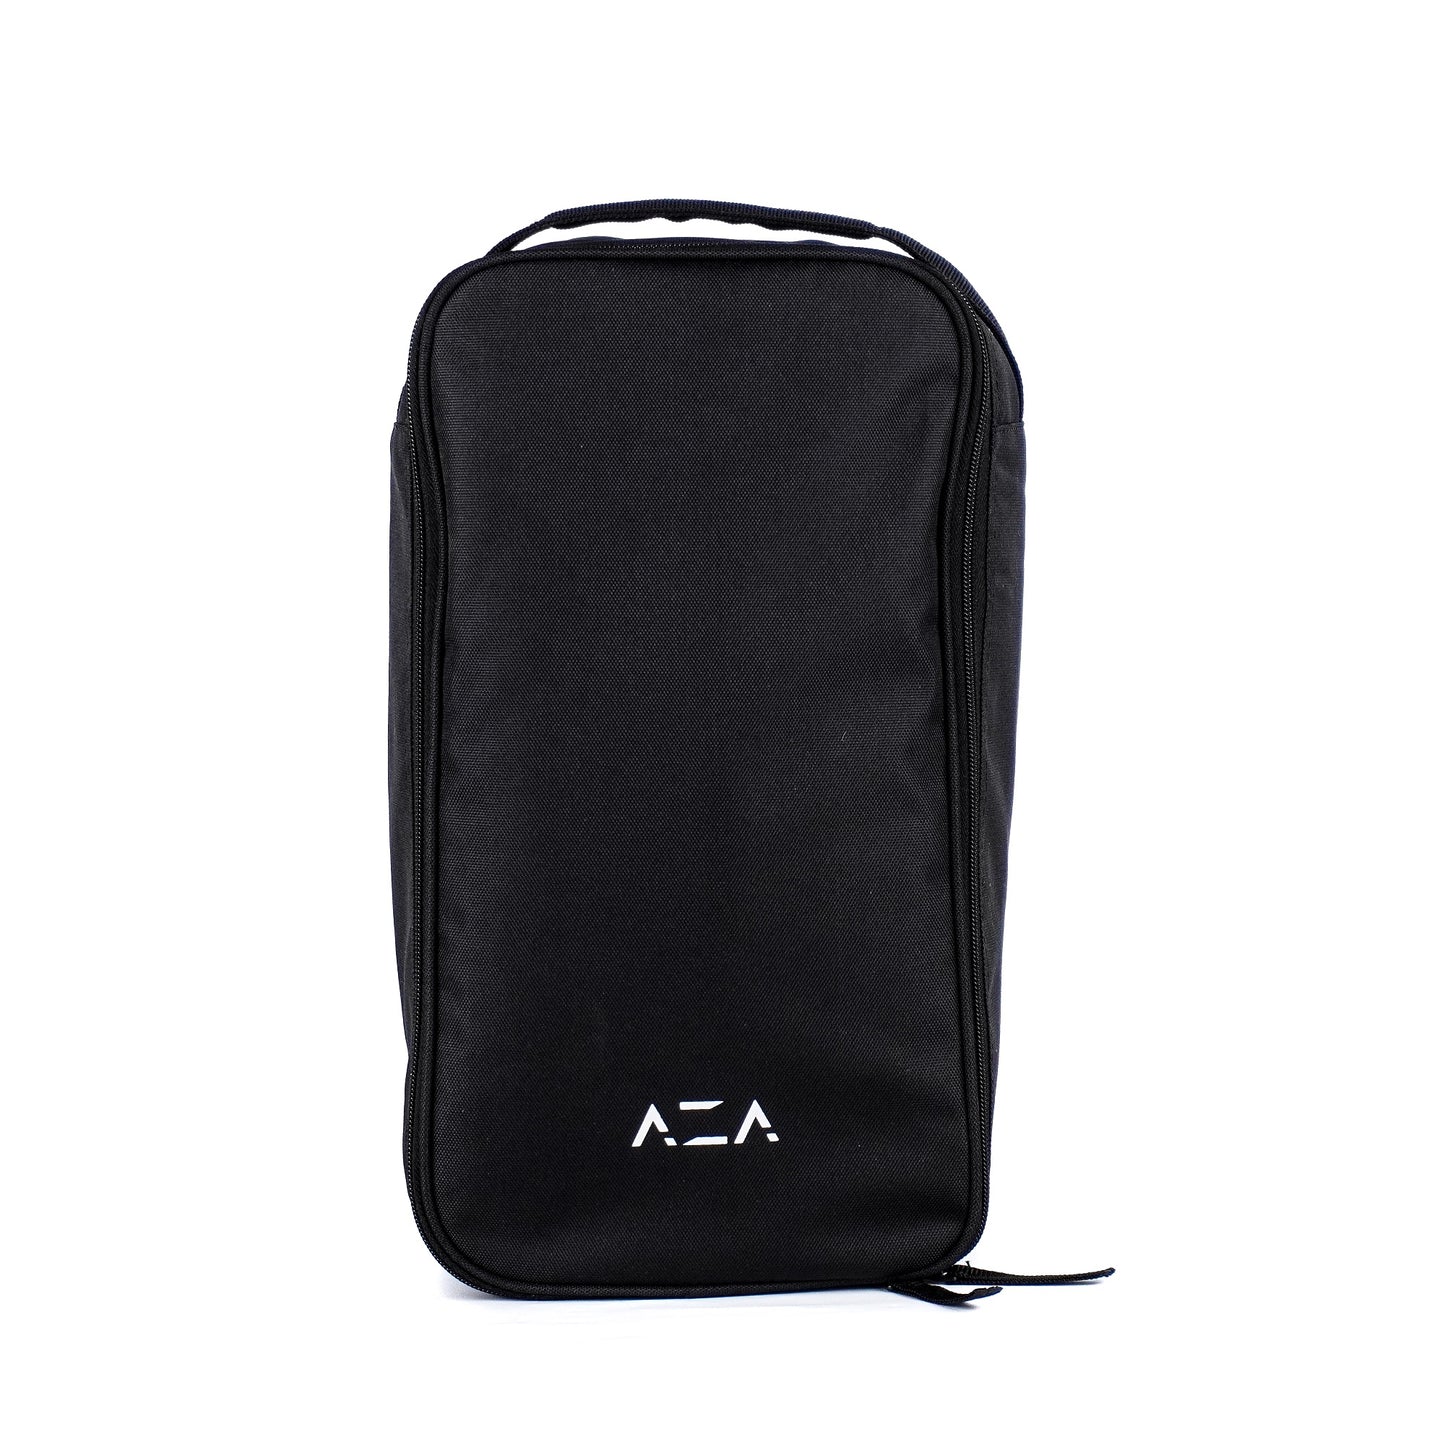 AZA Shoes Bag Simple Basic